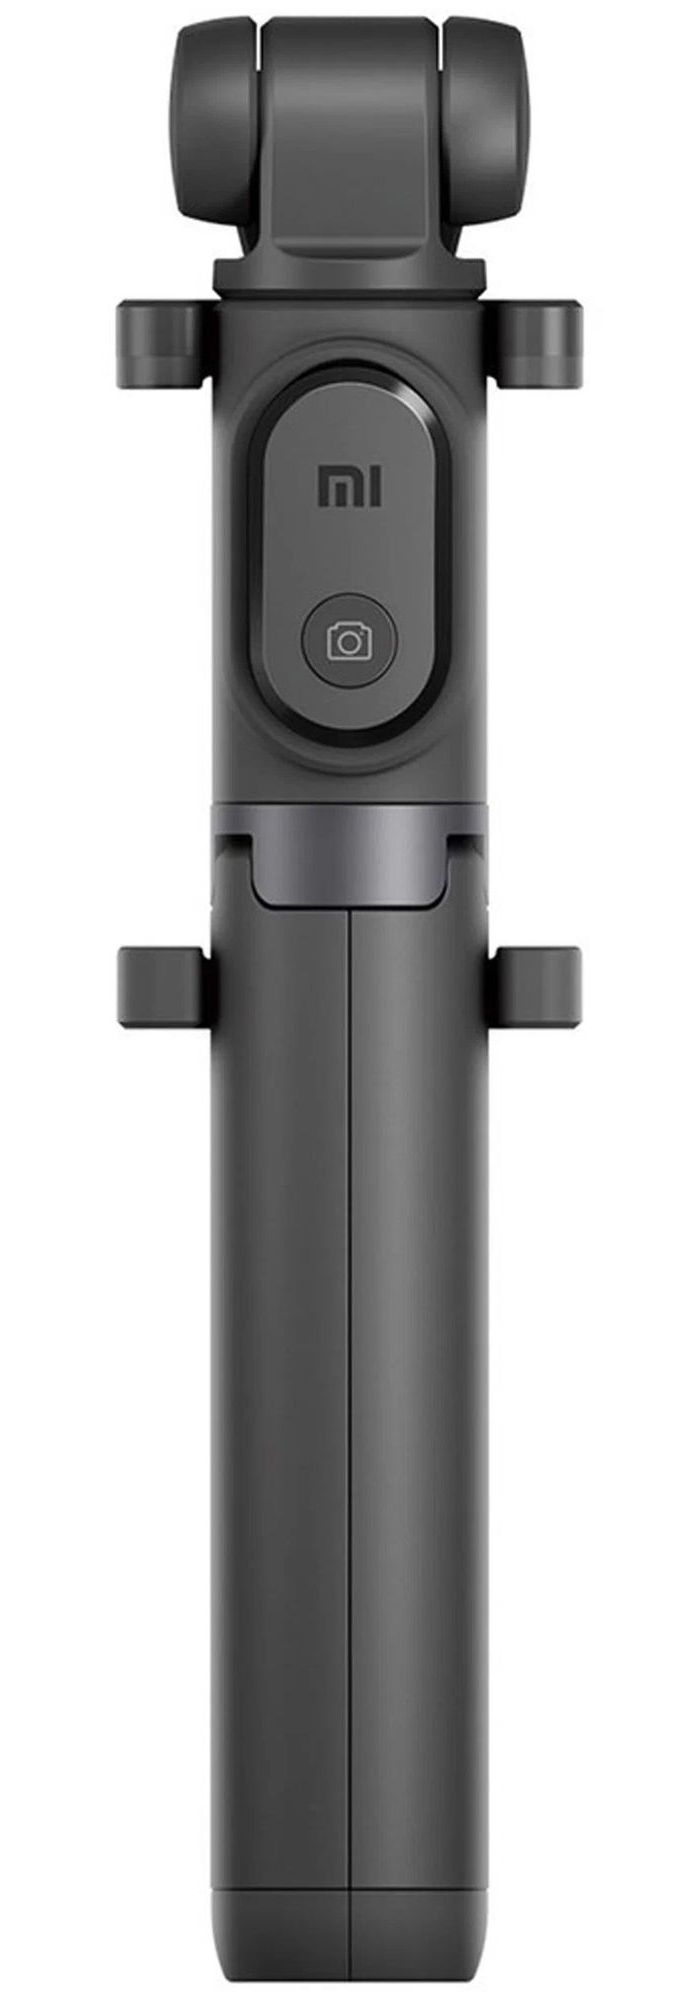 Монопод Xiaomi Mi Selfie Stick Tripod Black (XMZPG01YM) монопод xiaomi mi bluetooth selfie stick tripod black